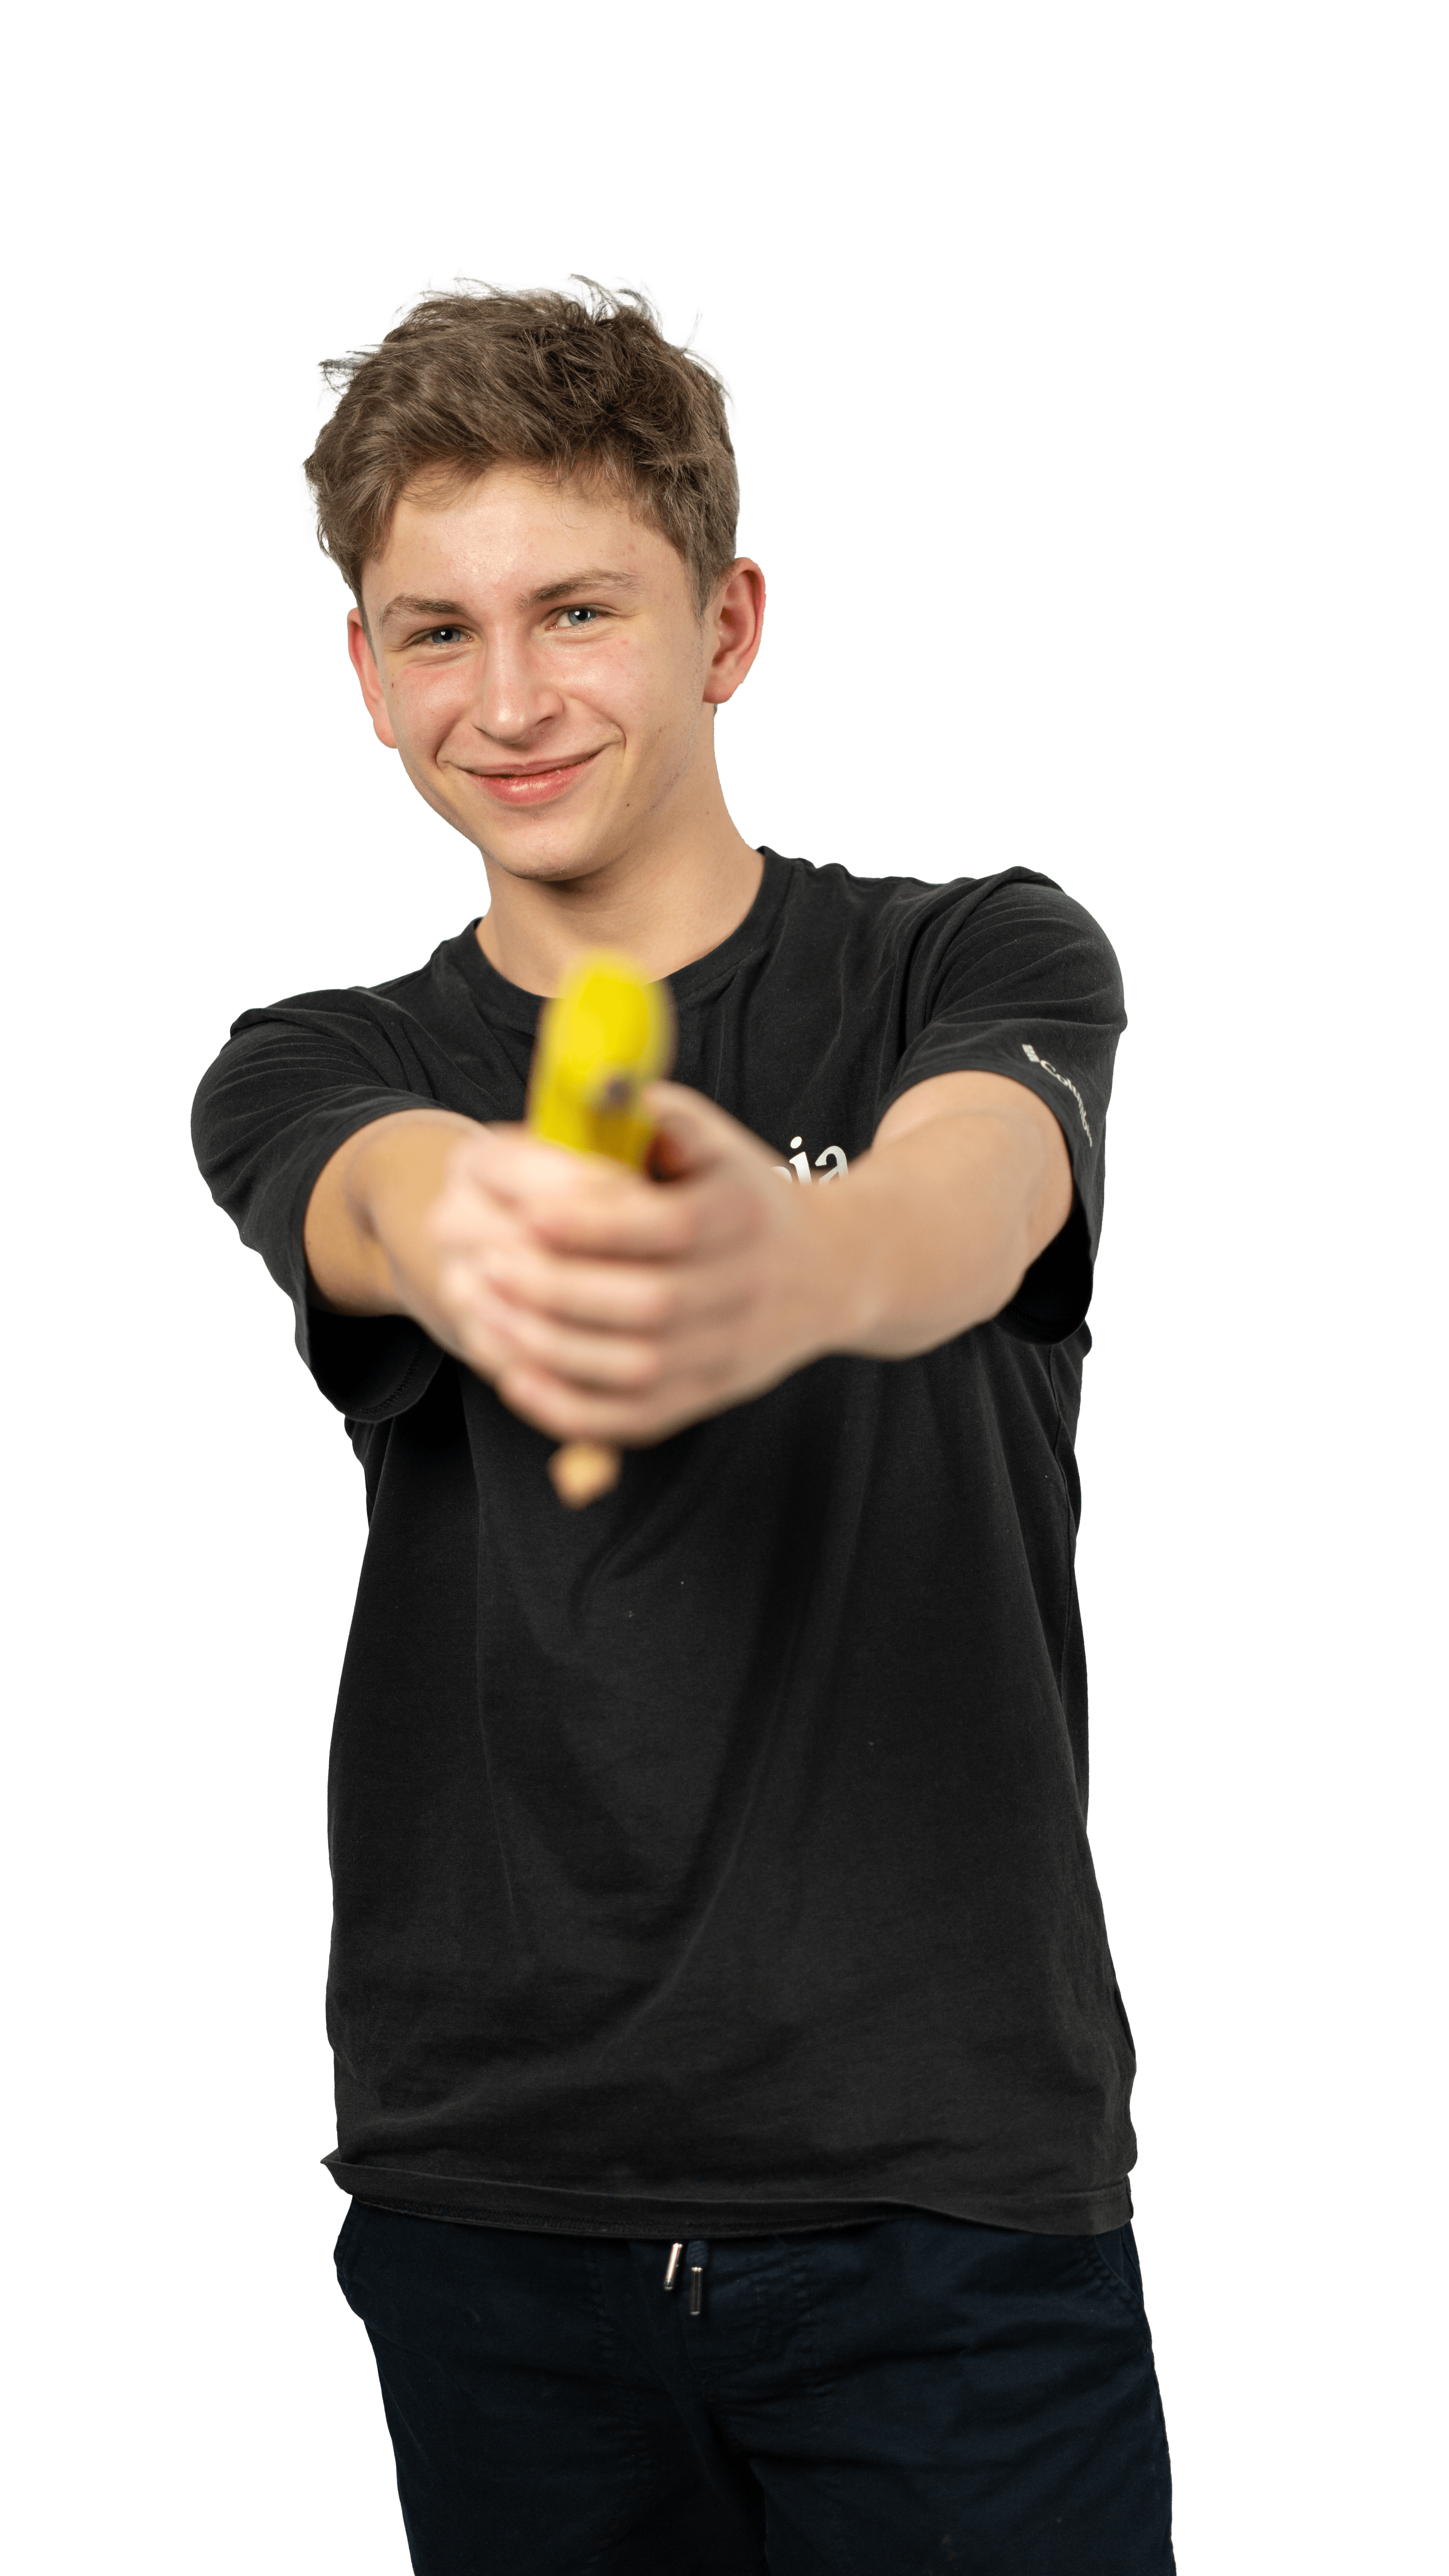 Boy pointing banana